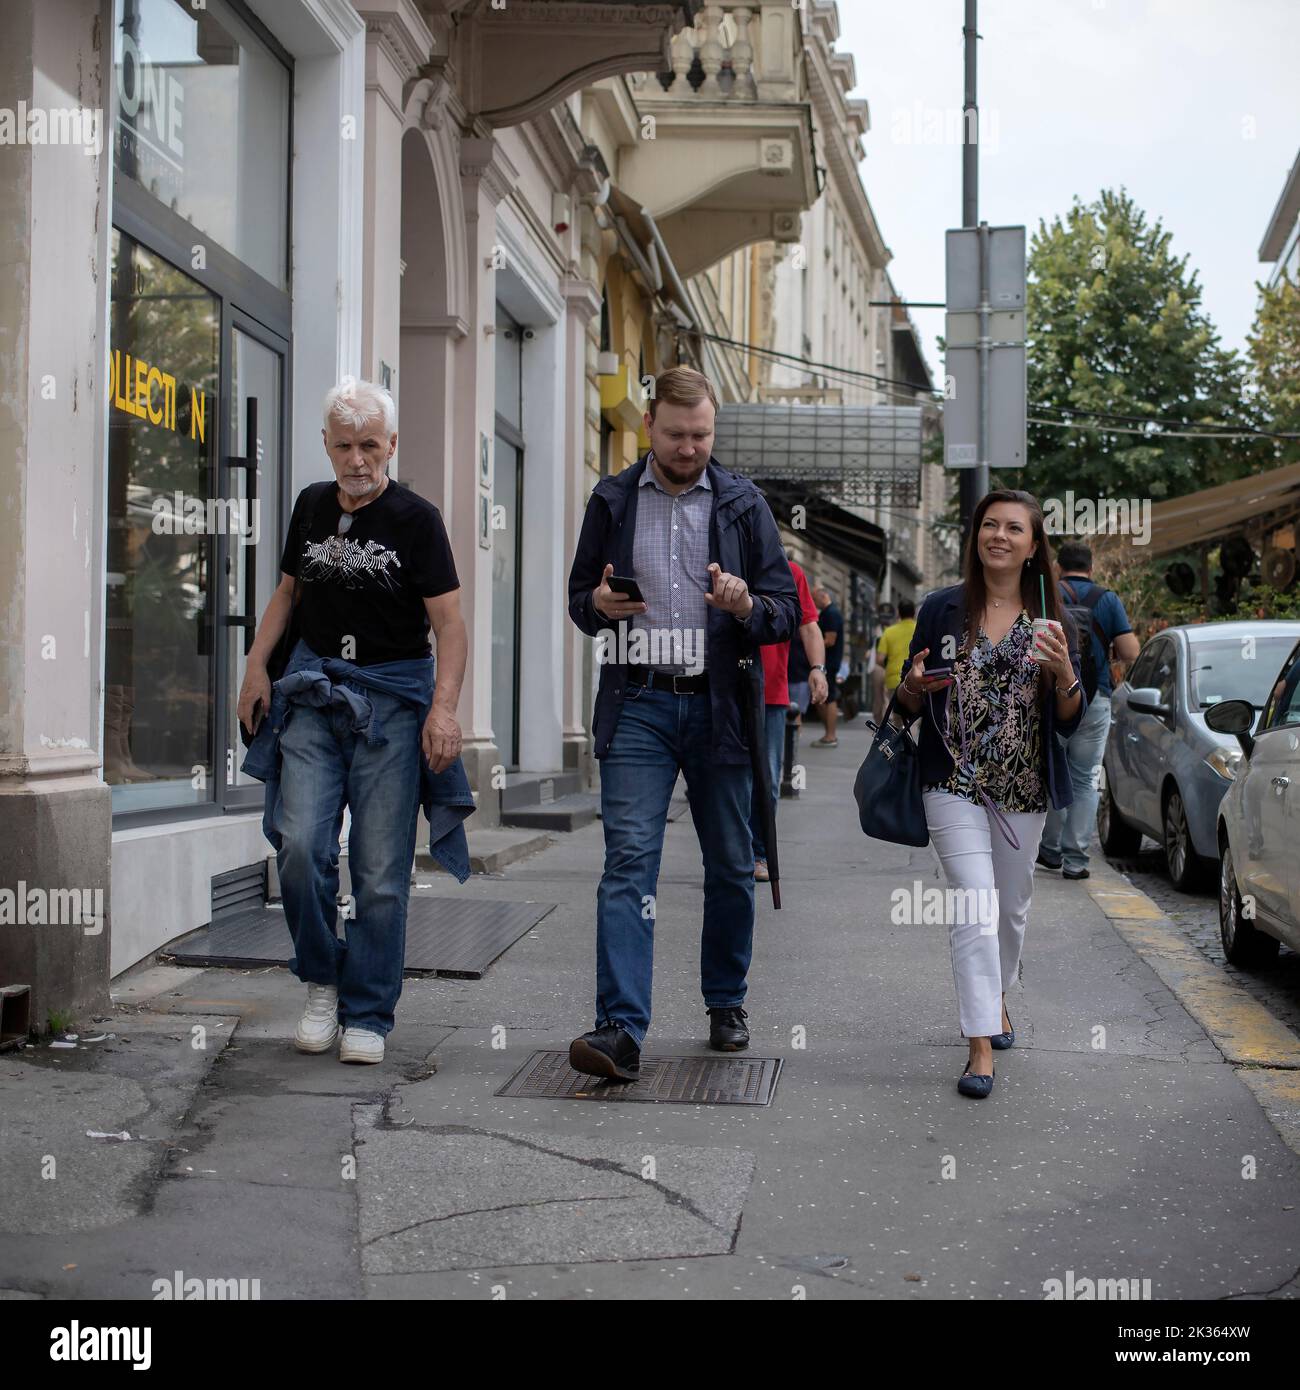 Belgrade, Serbia, Aug 30, 2022: People walking down the street Stock Photo